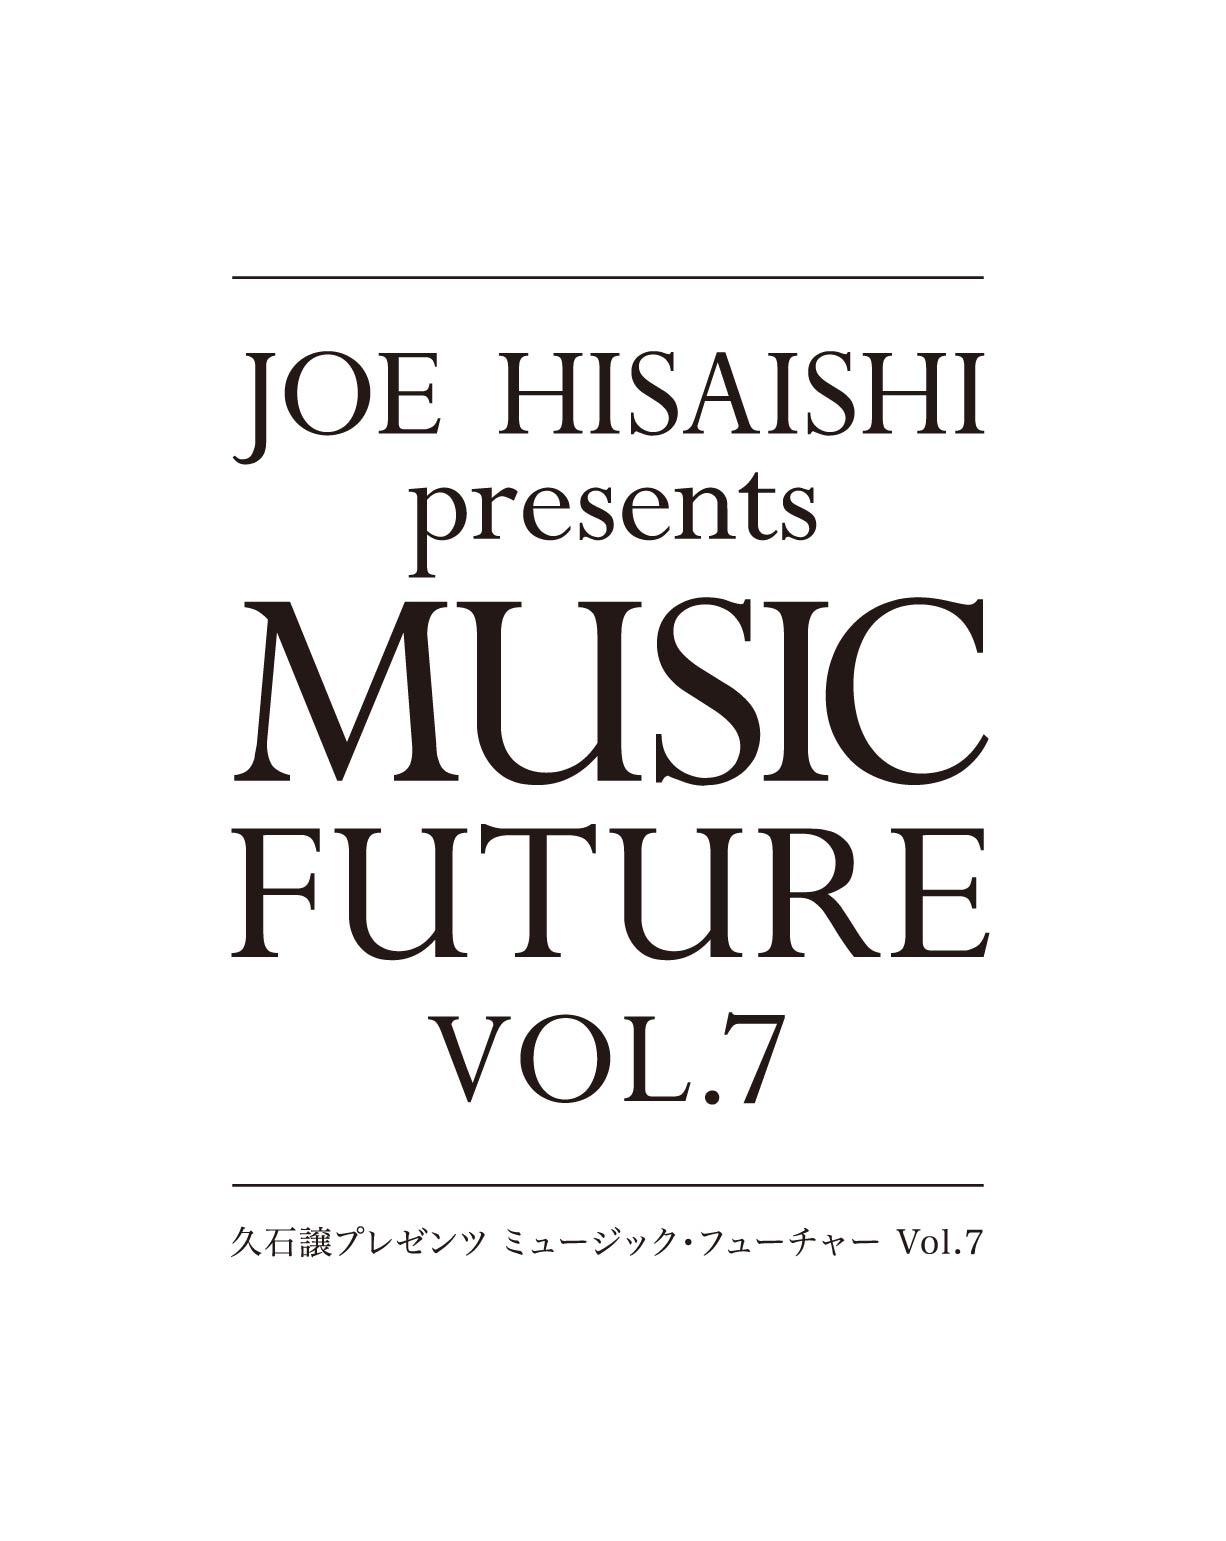 [Streaming+] Joe Hisaishi presents MUSIC FUTURE Vol.7